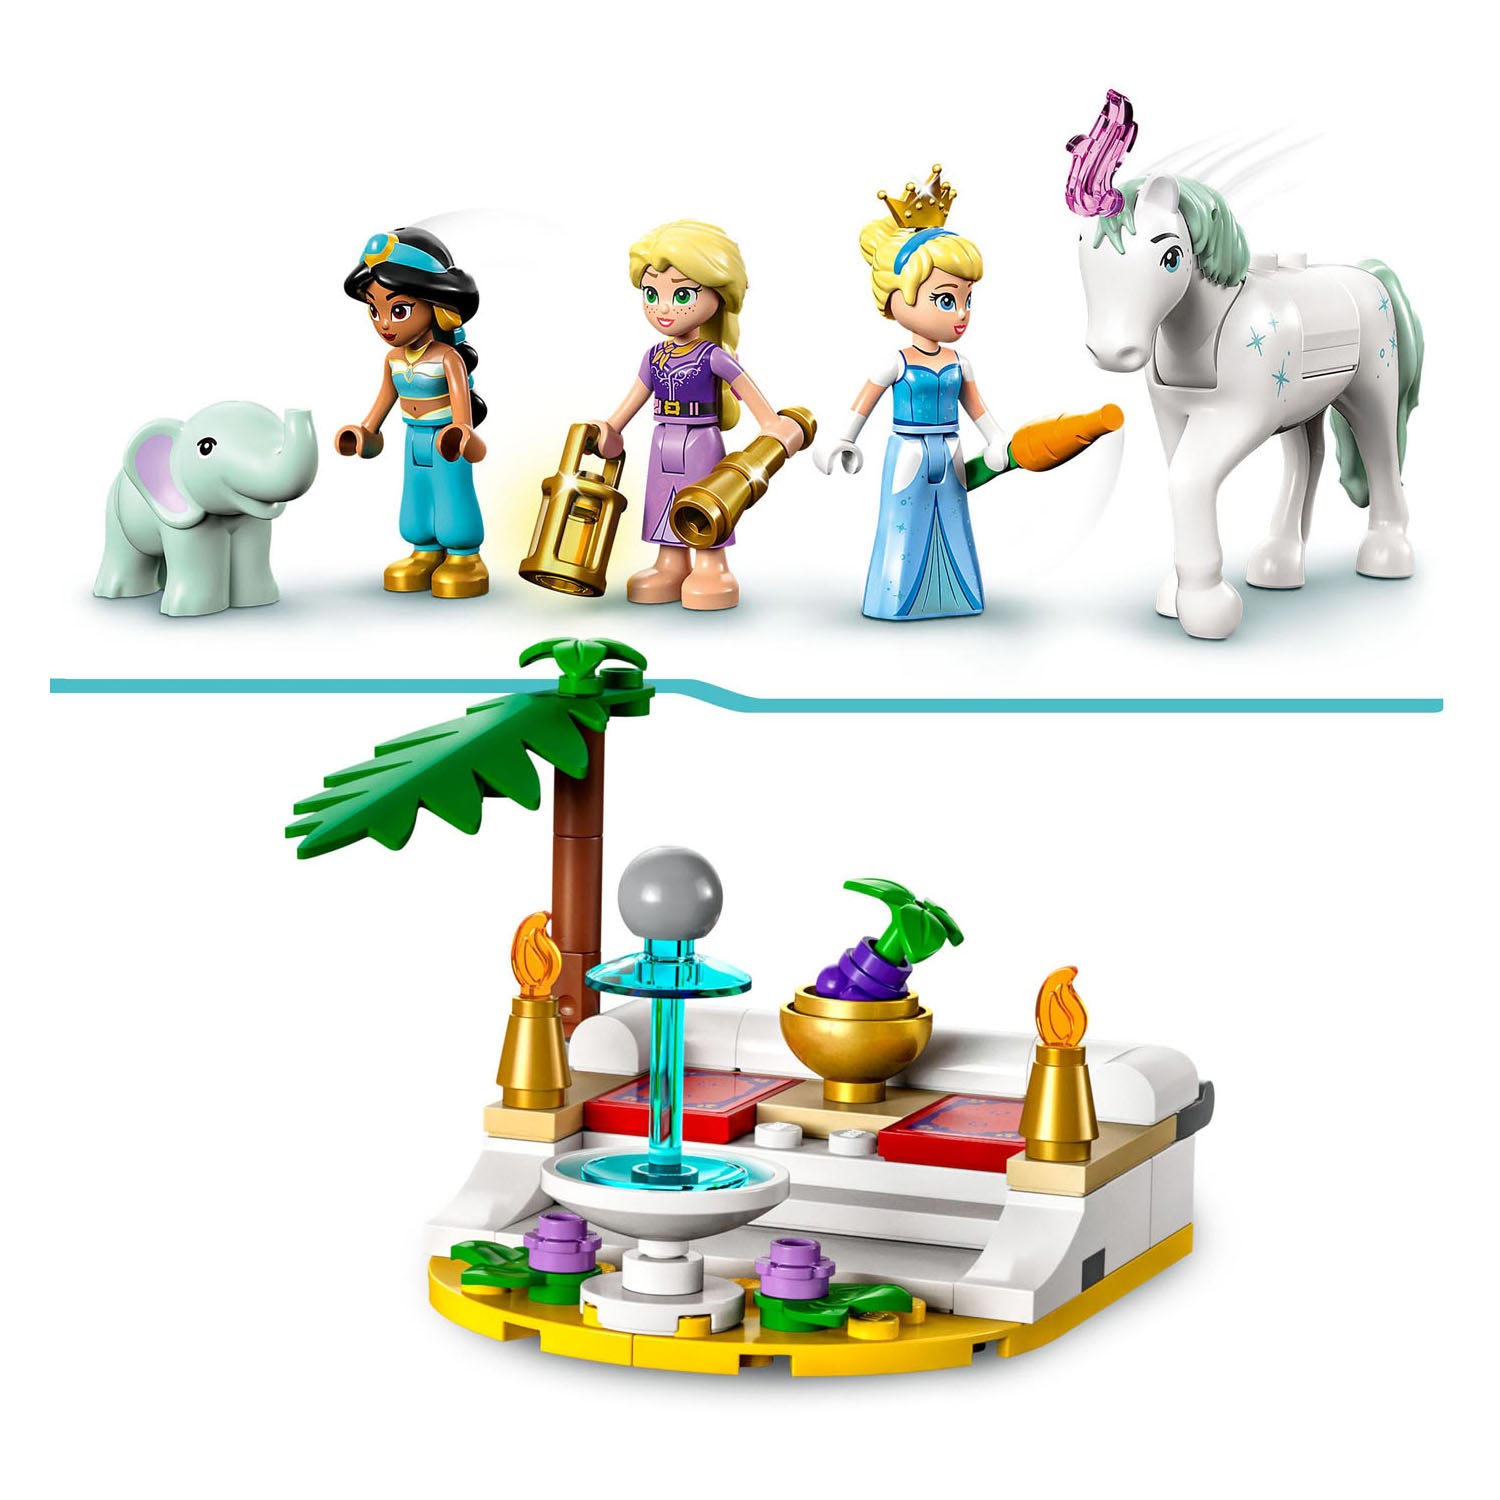 LEGO Disney 43216 Le voyage enchanté de la princesse